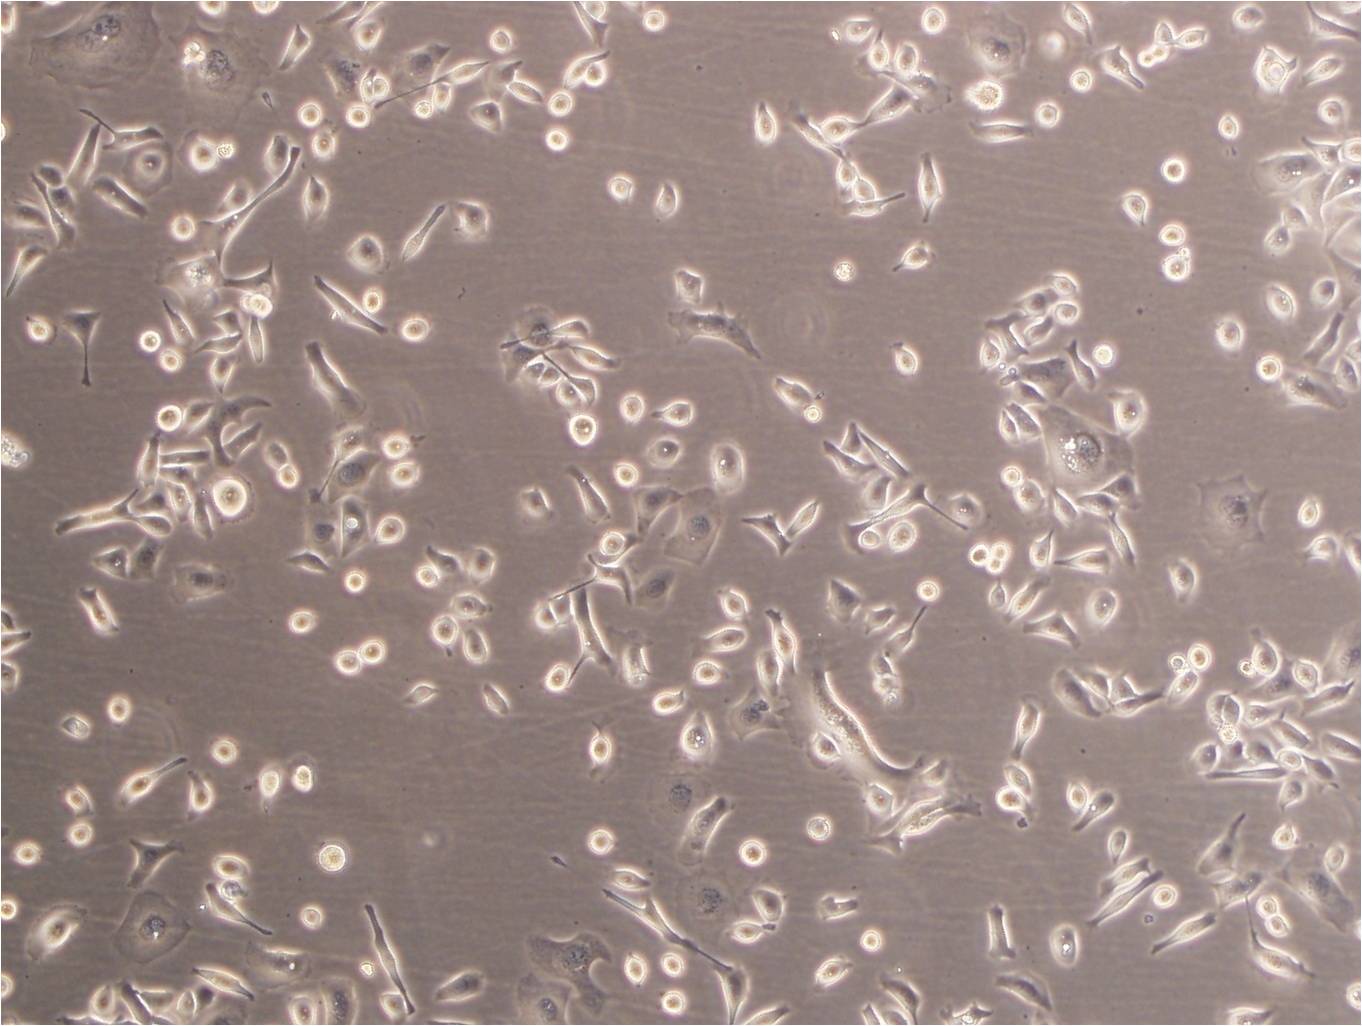 SW1271 epithelioid cells人肺腺癌细胞系,SW1271 epithelioid cells